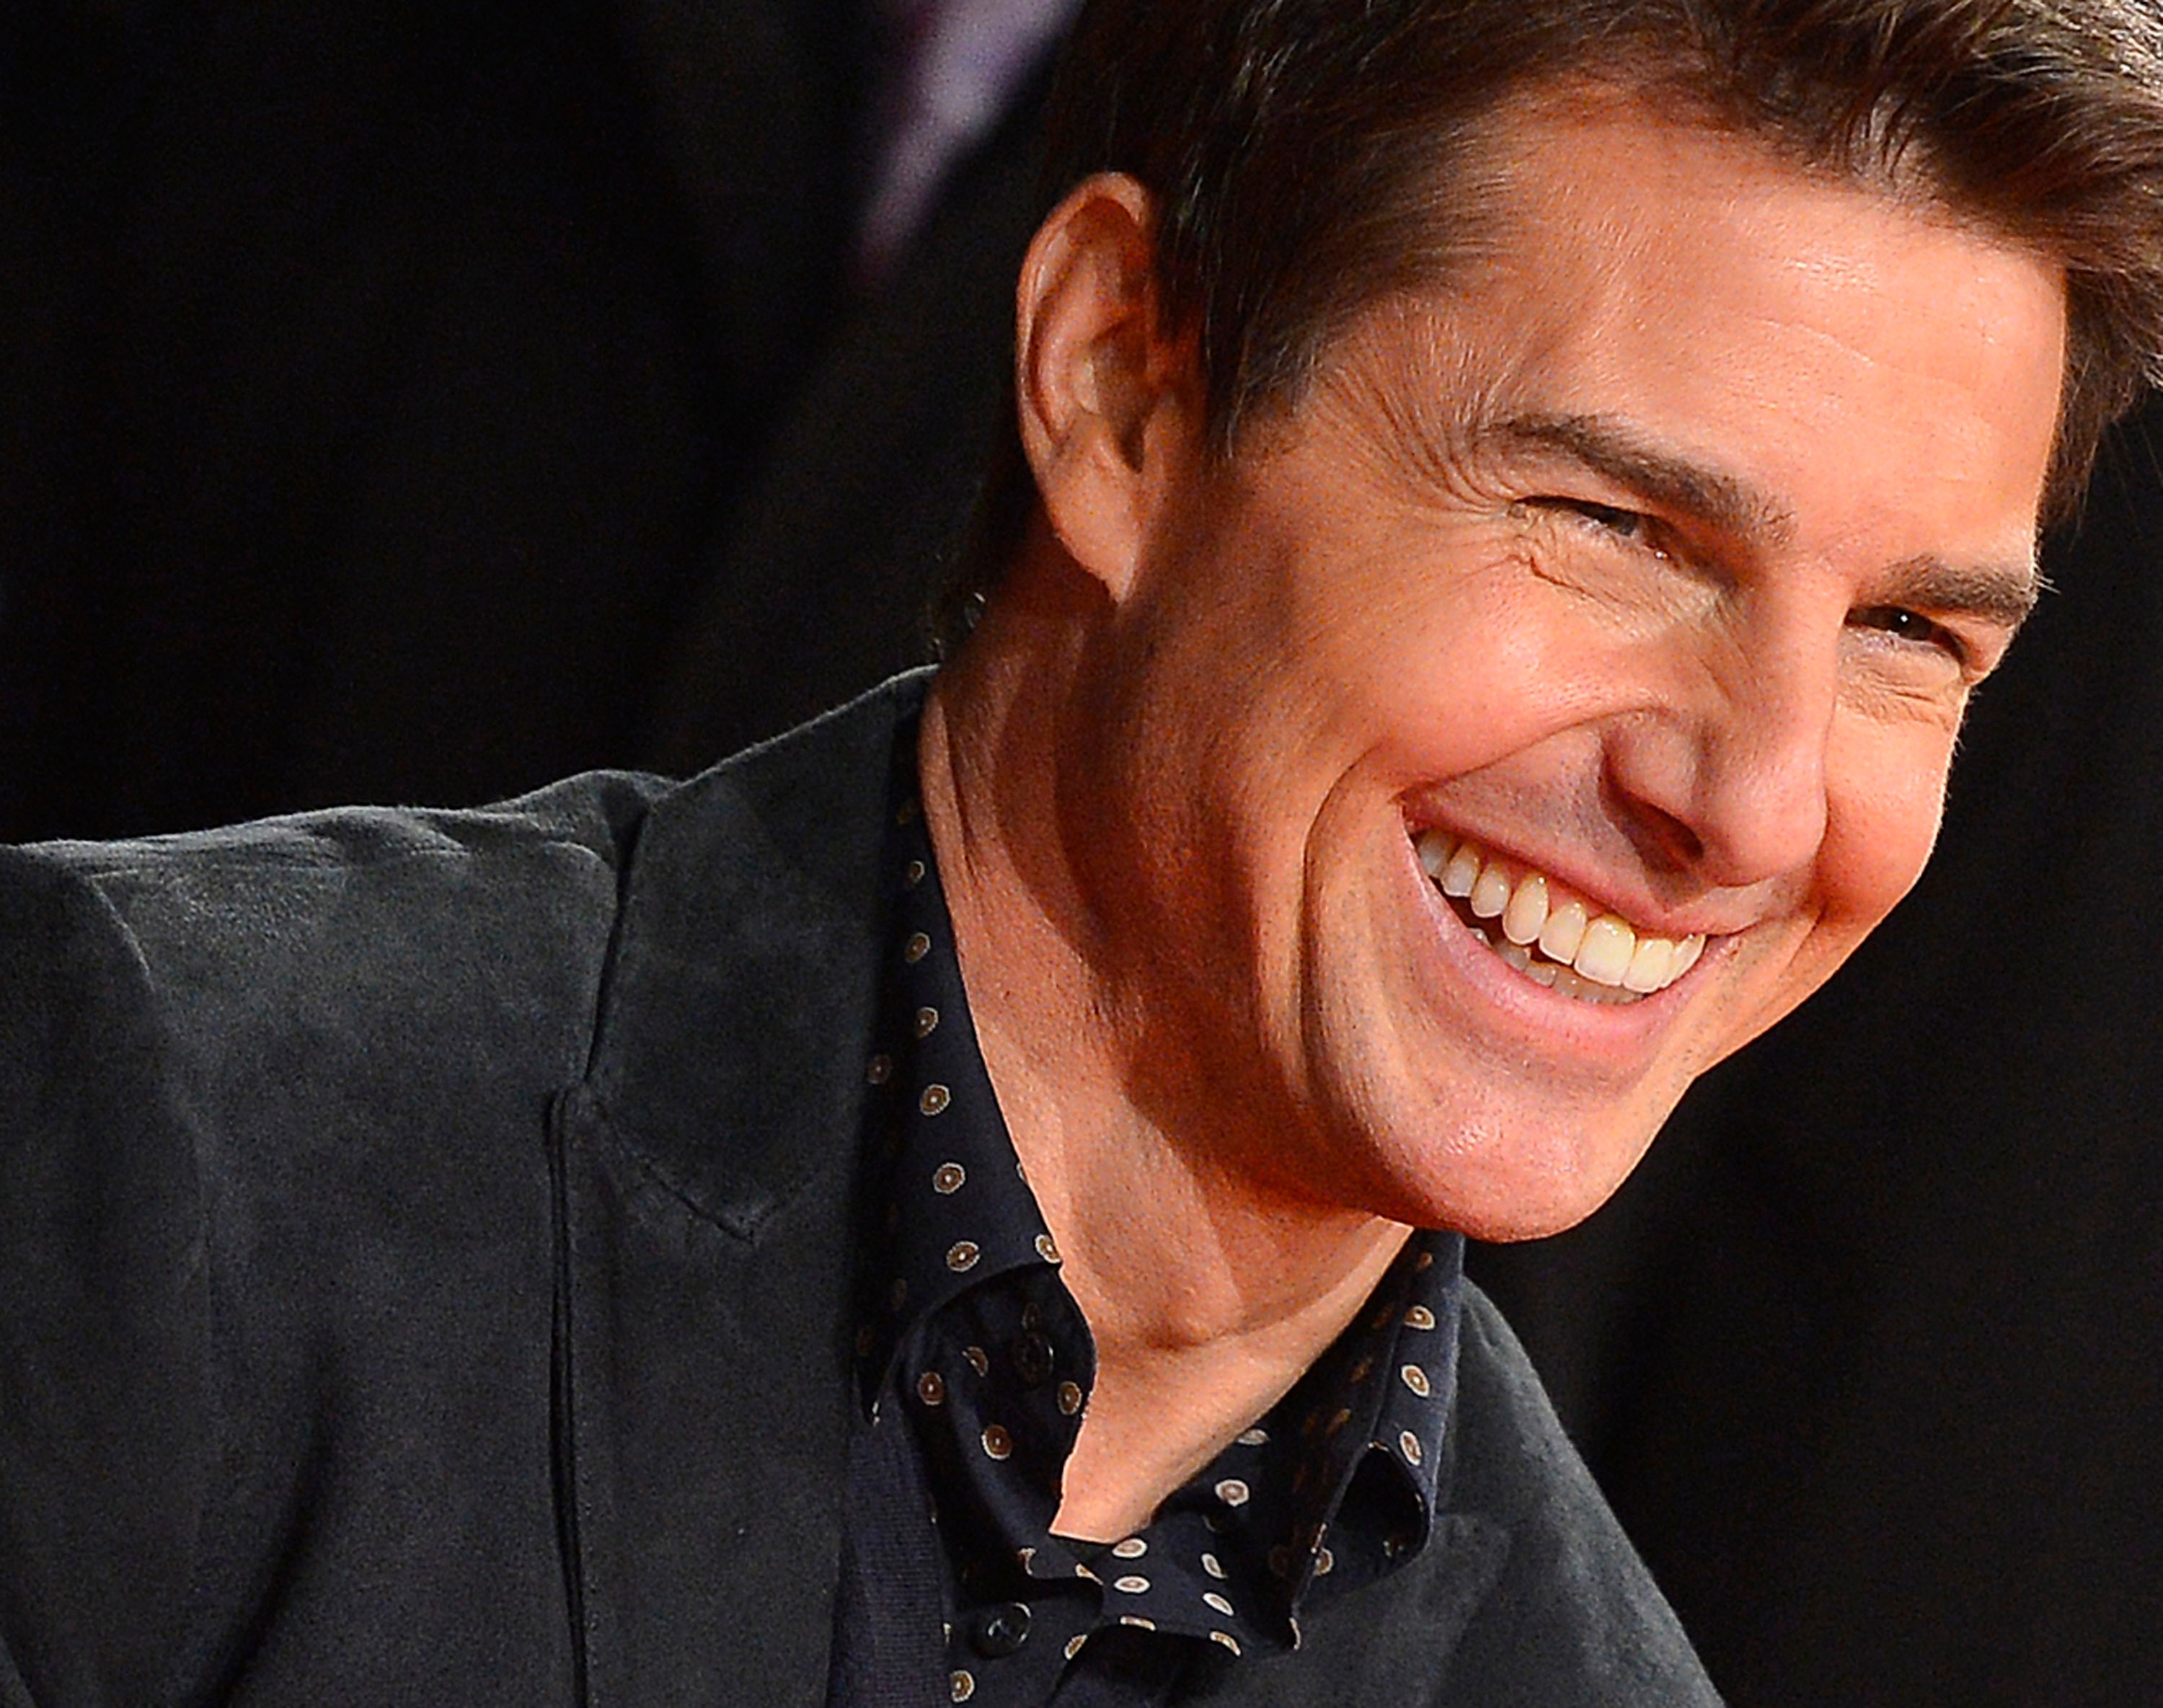 Tom Cruise's 'Top Gun: Maverick' Pushed Back to 2020